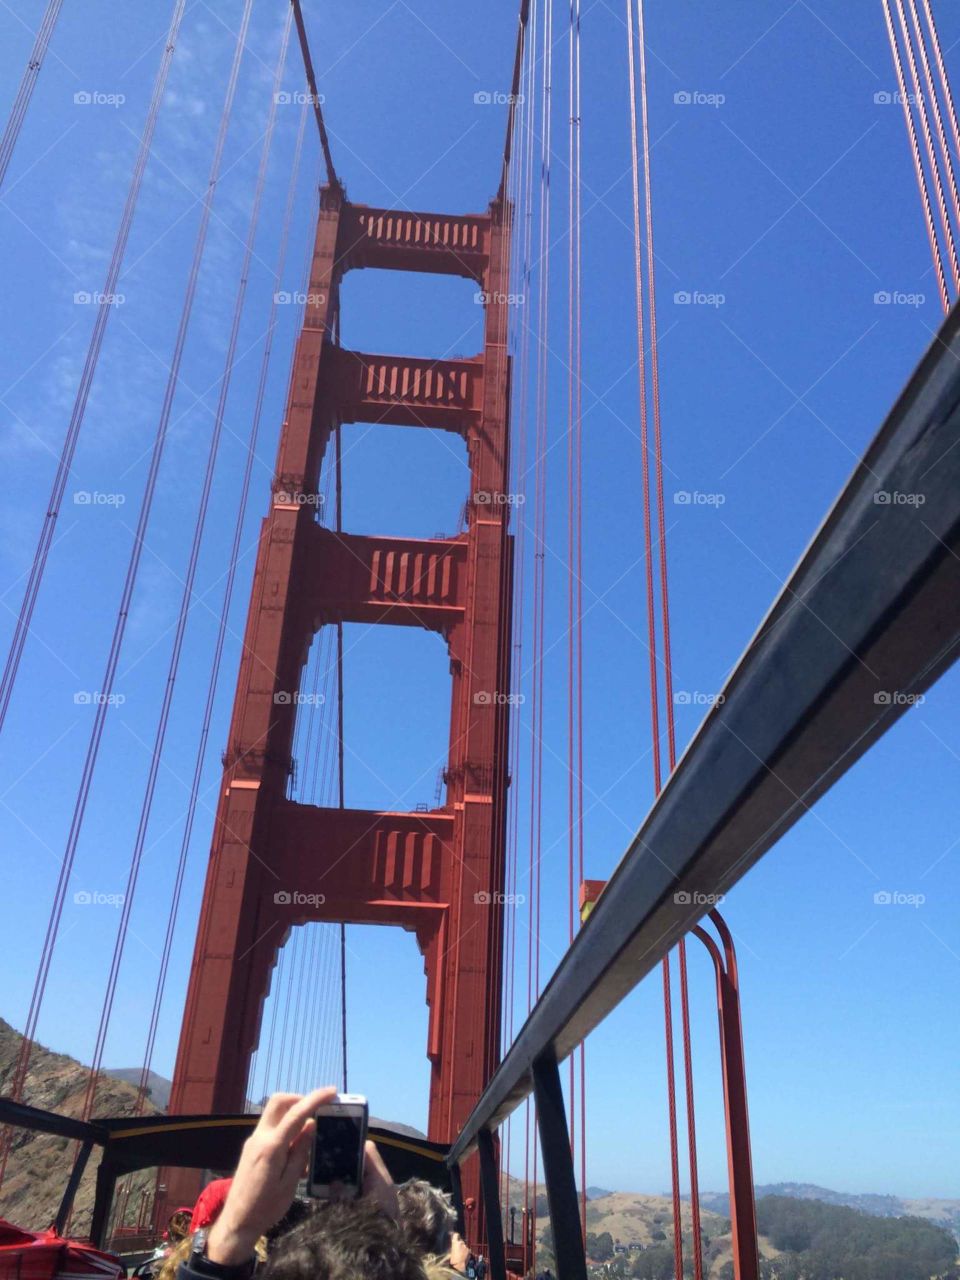 Under the San Francisco Bridge